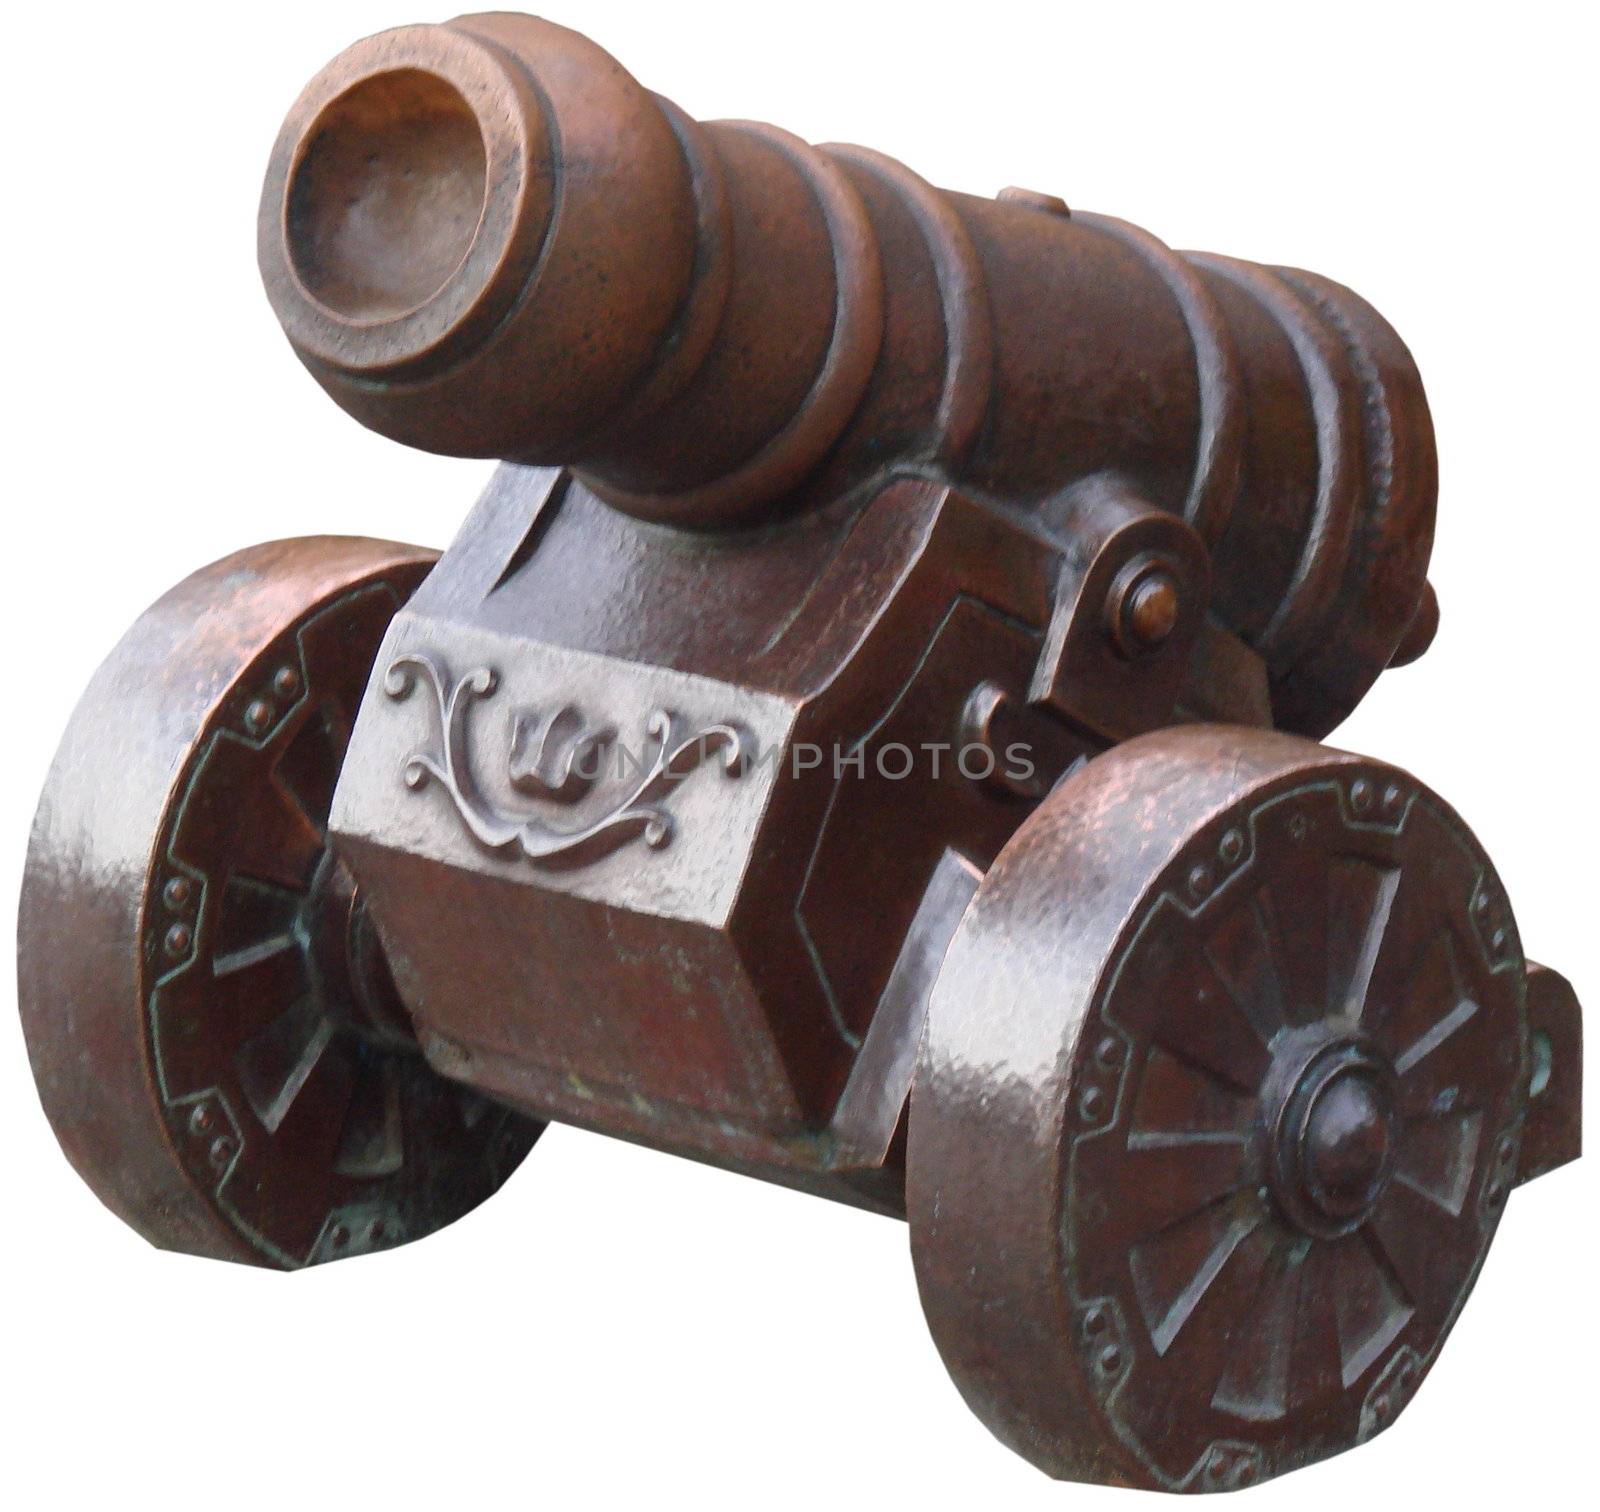 Decorative ancient combat cannon by fotosergio